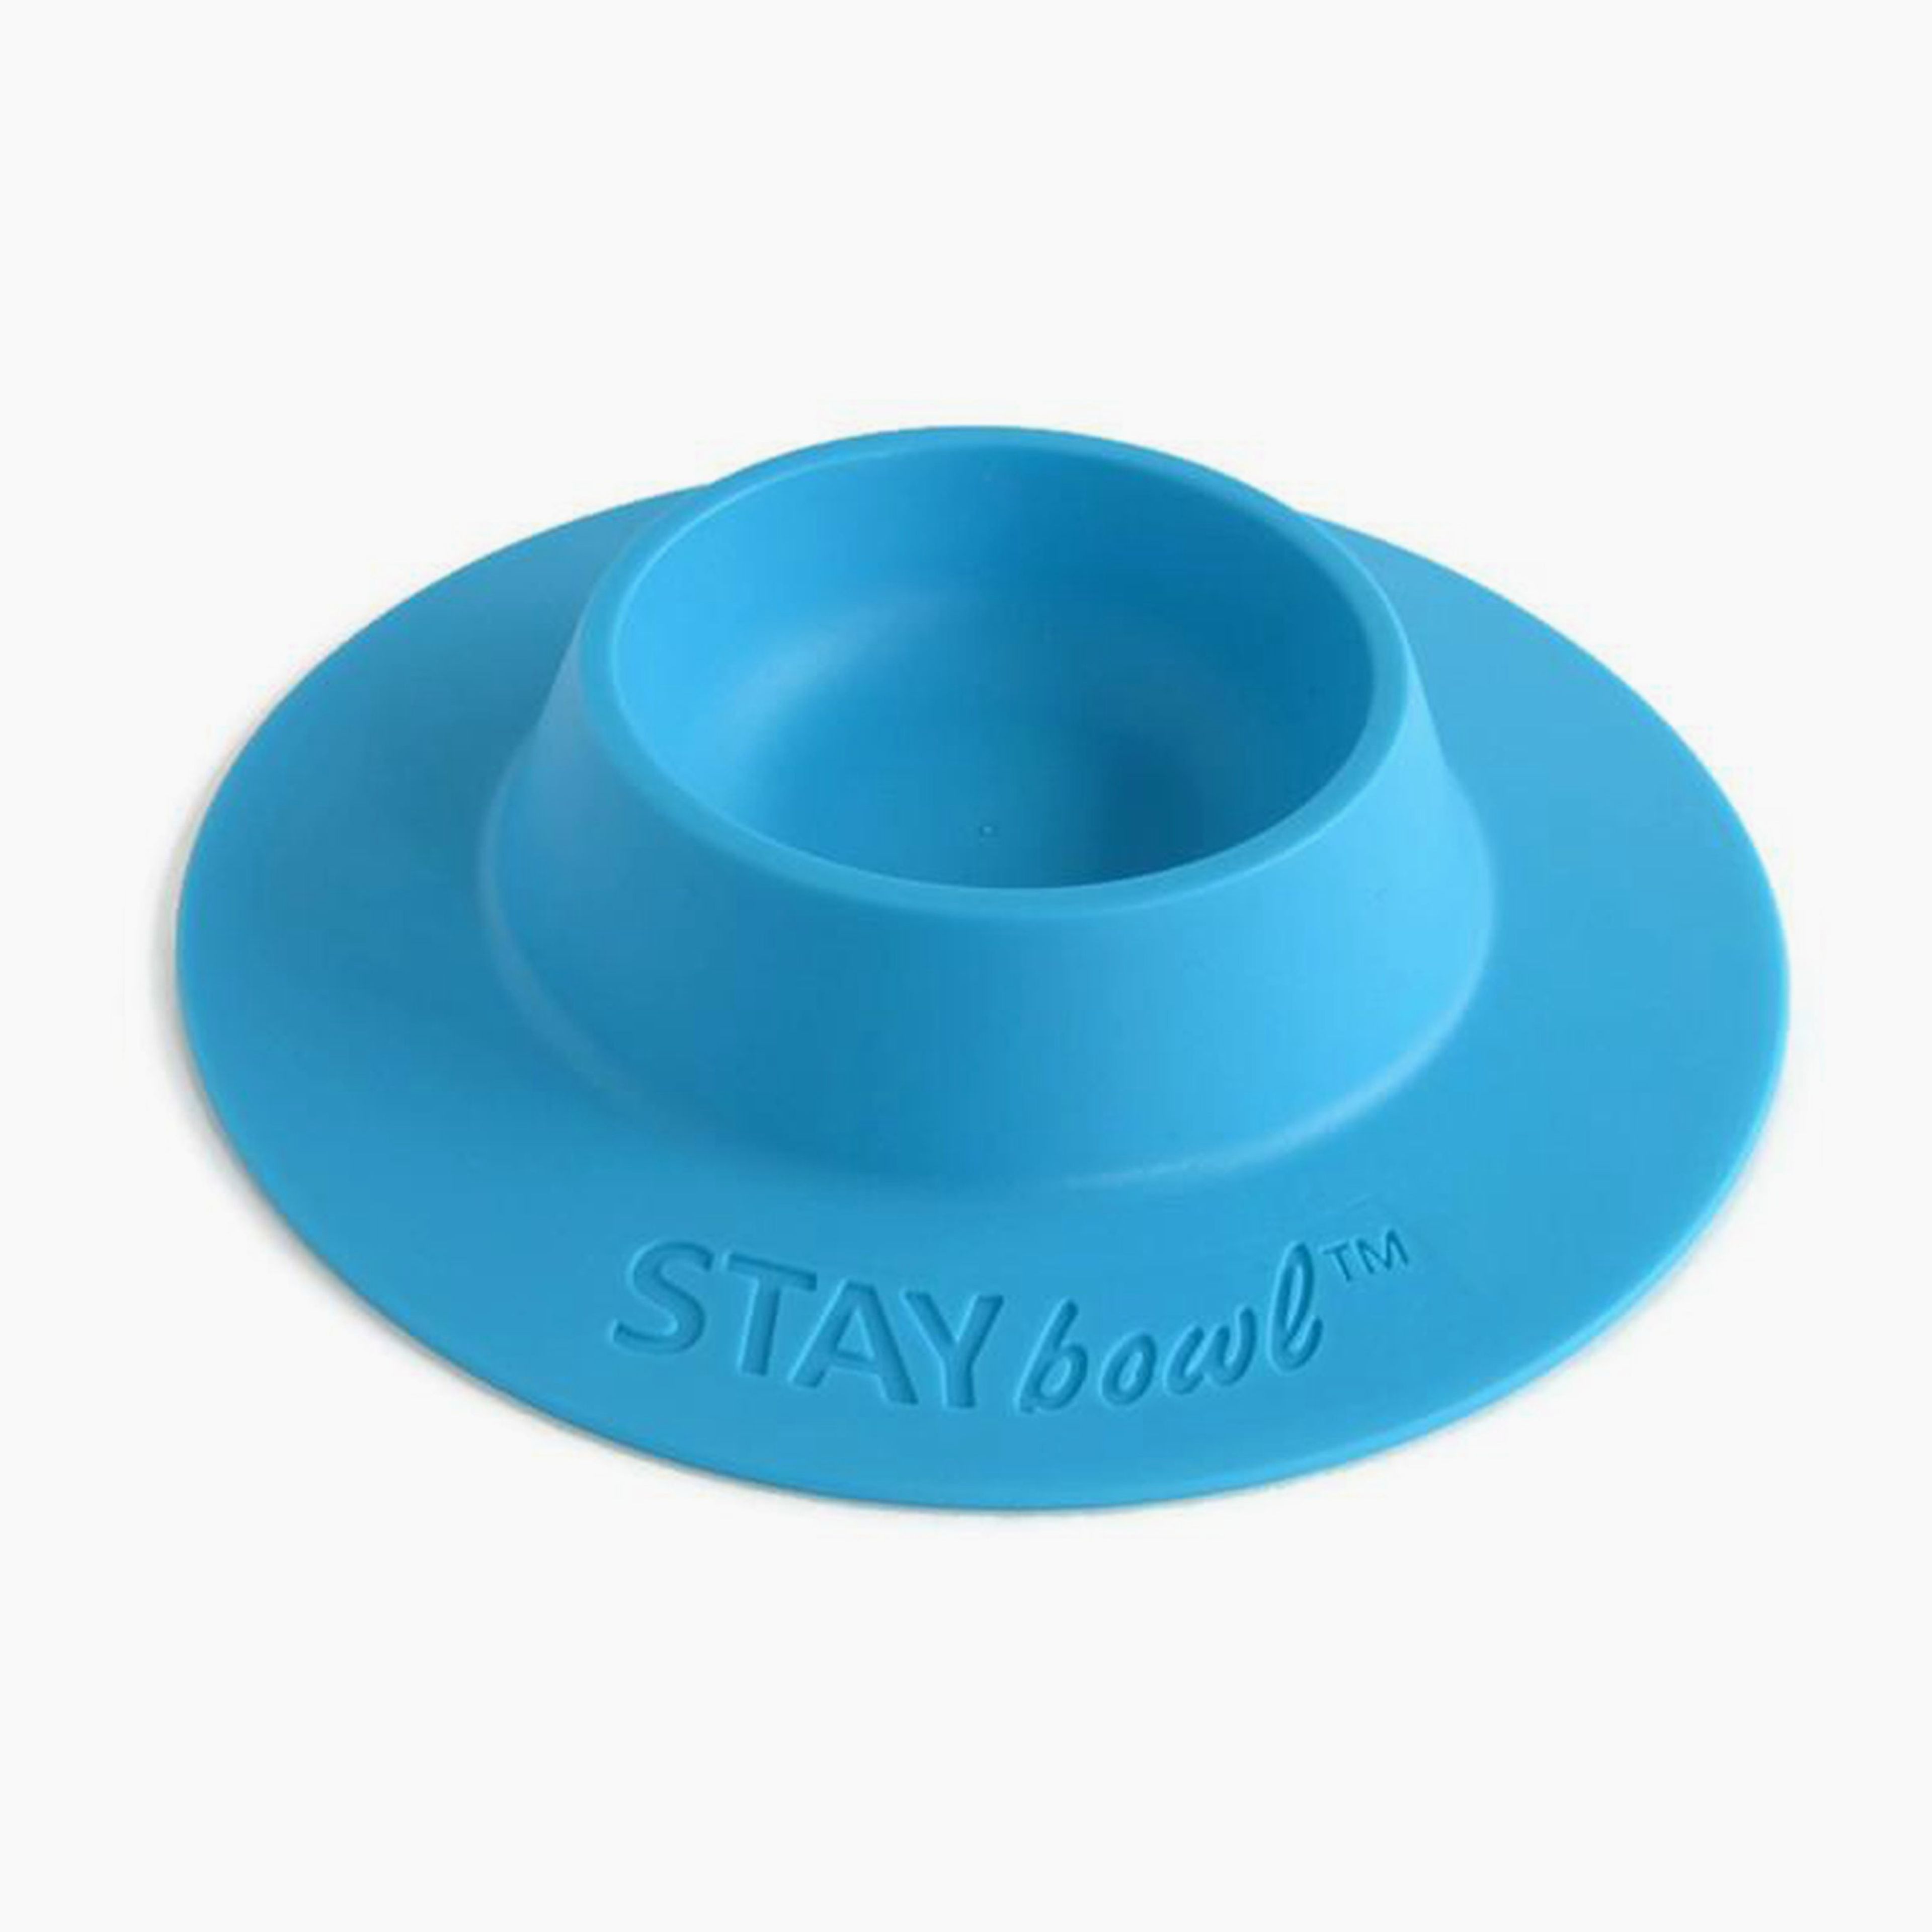 STAYbowl Tip-proof Food Bowl